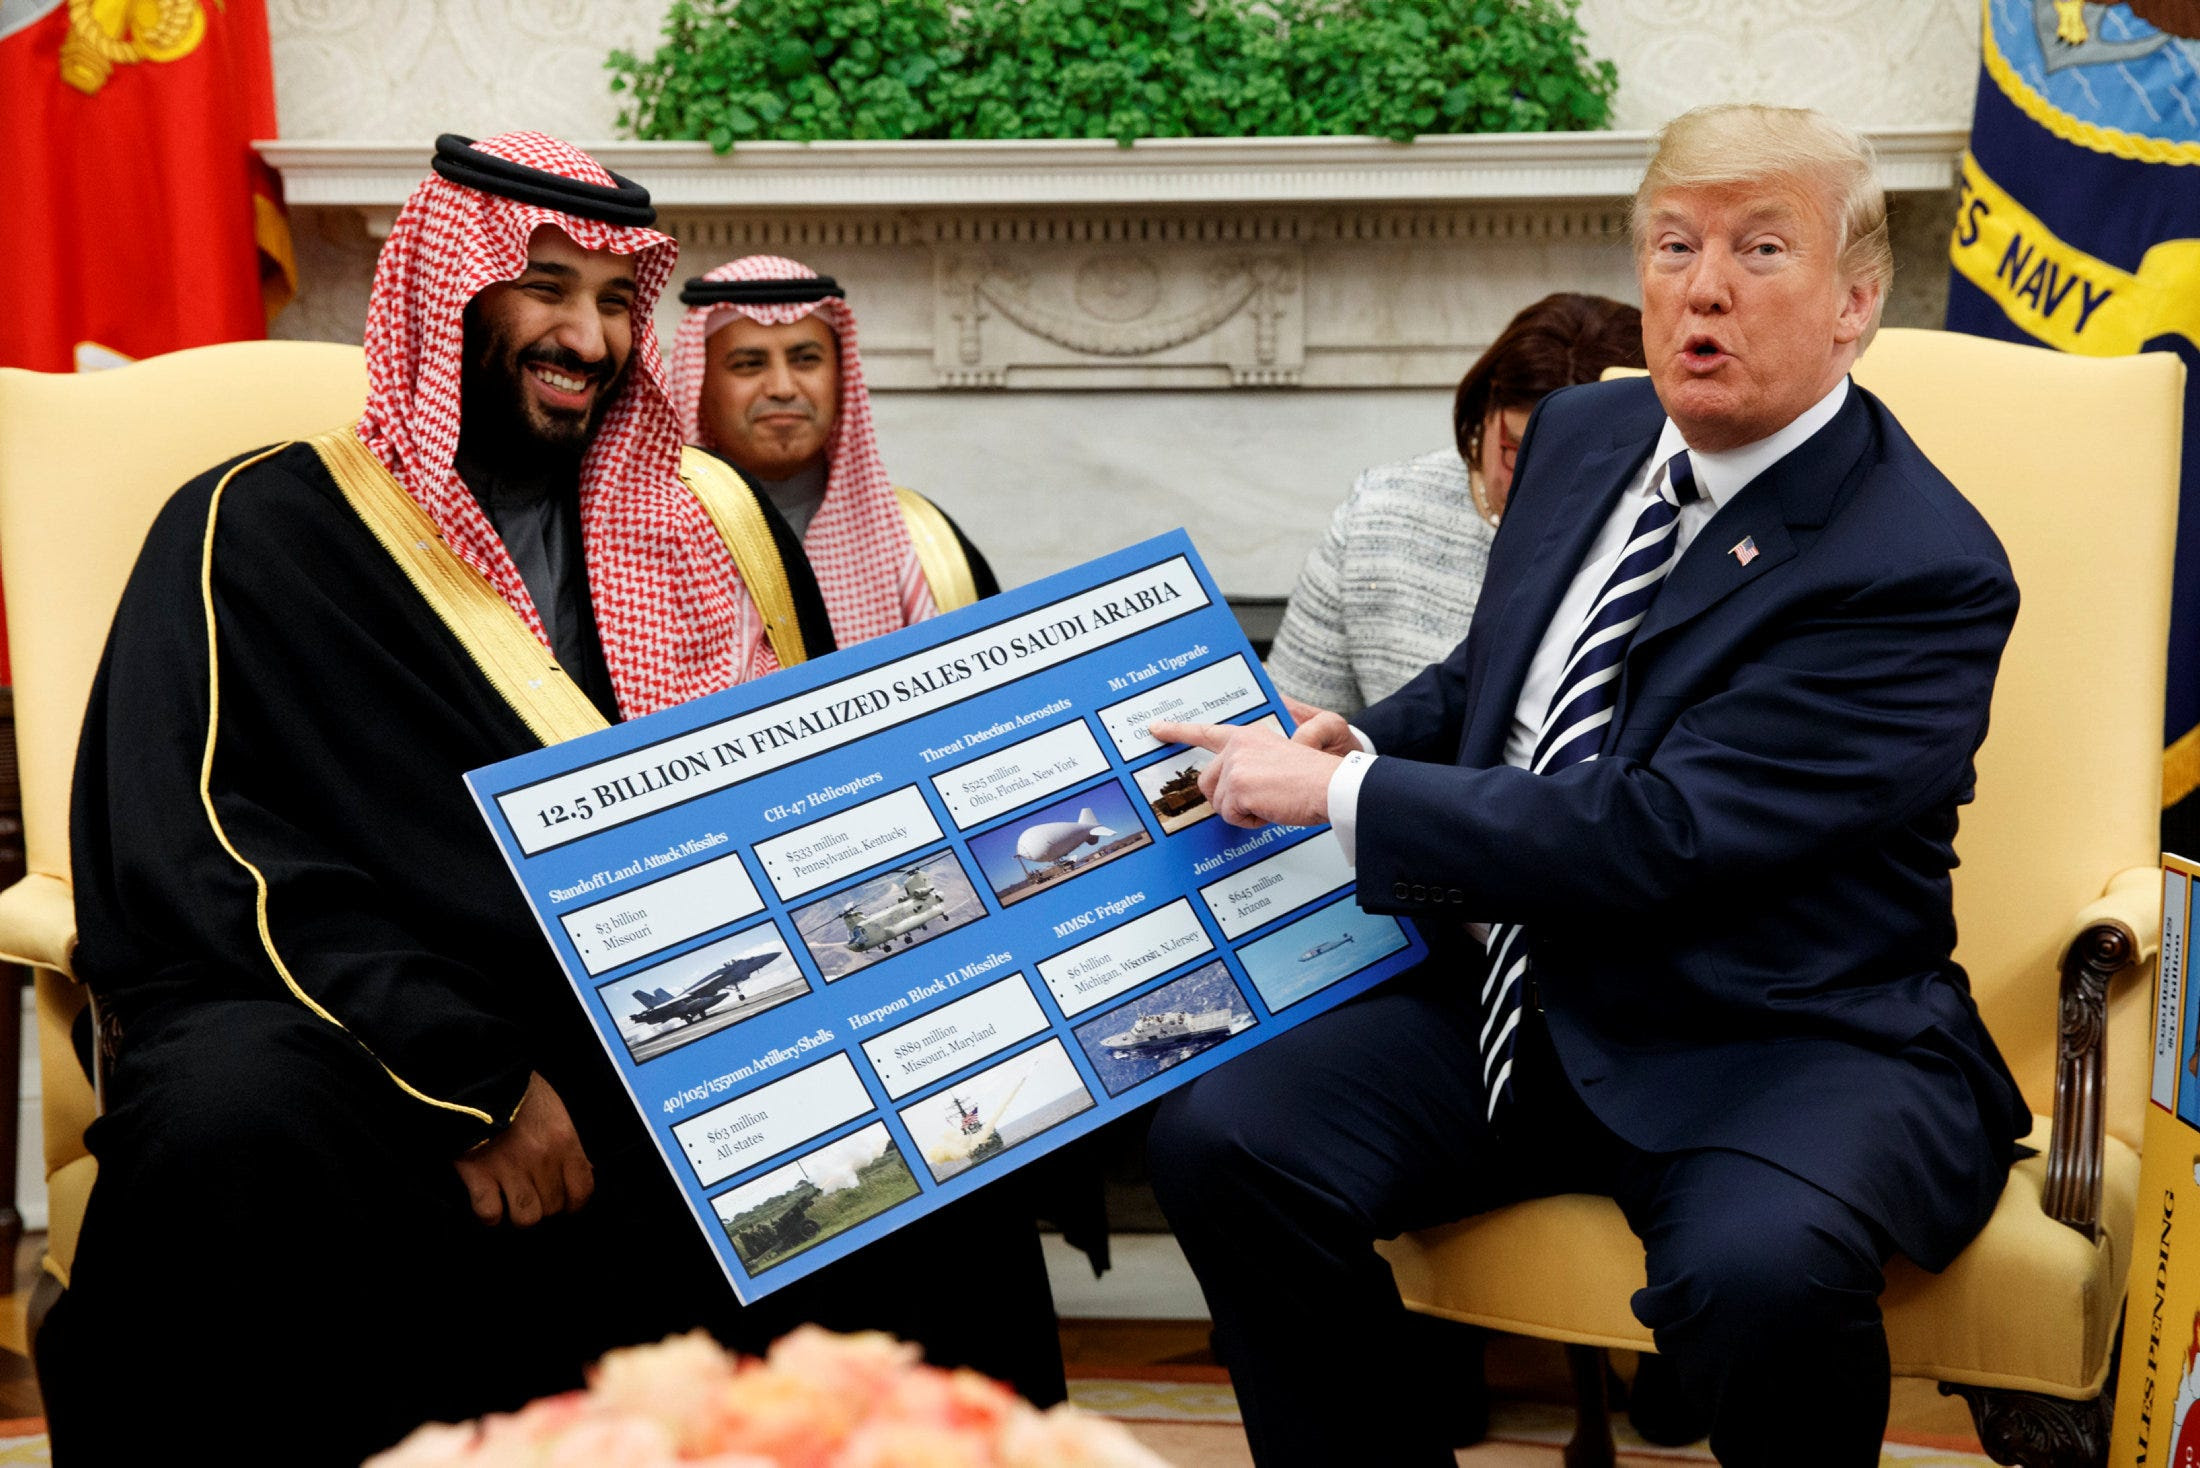 President Donald Trump shows a chart highlighting arms sales to Saudi Arabia during a meeting with Saudi Crown Prince Mohammed bin Salman, Washington, March 20, 2018.